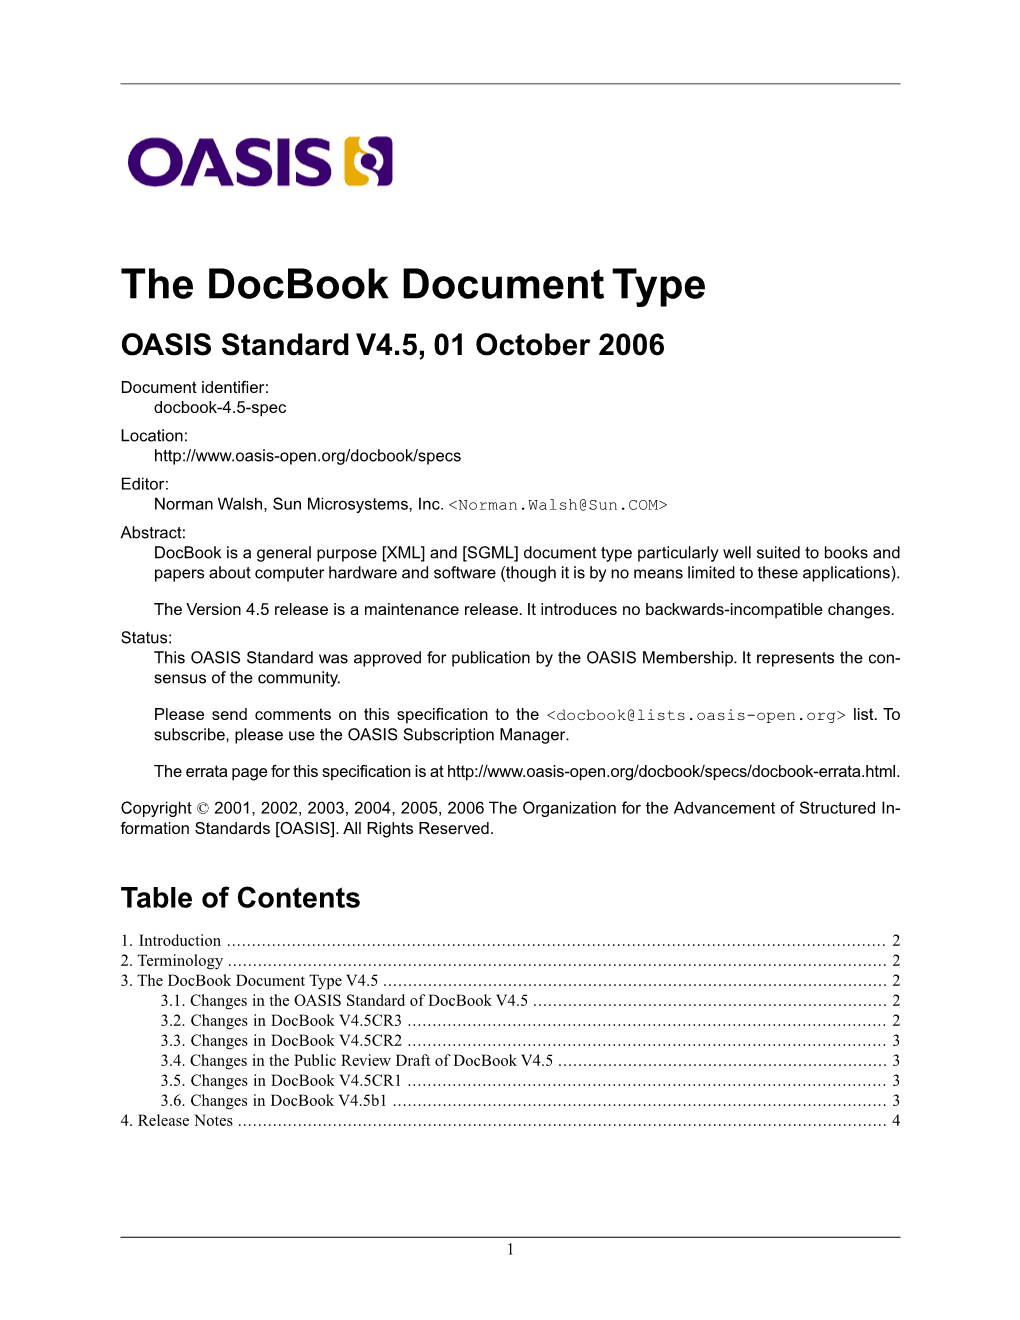 The Docbook Document Type OASIS Standard V4.5, 01 October 2006